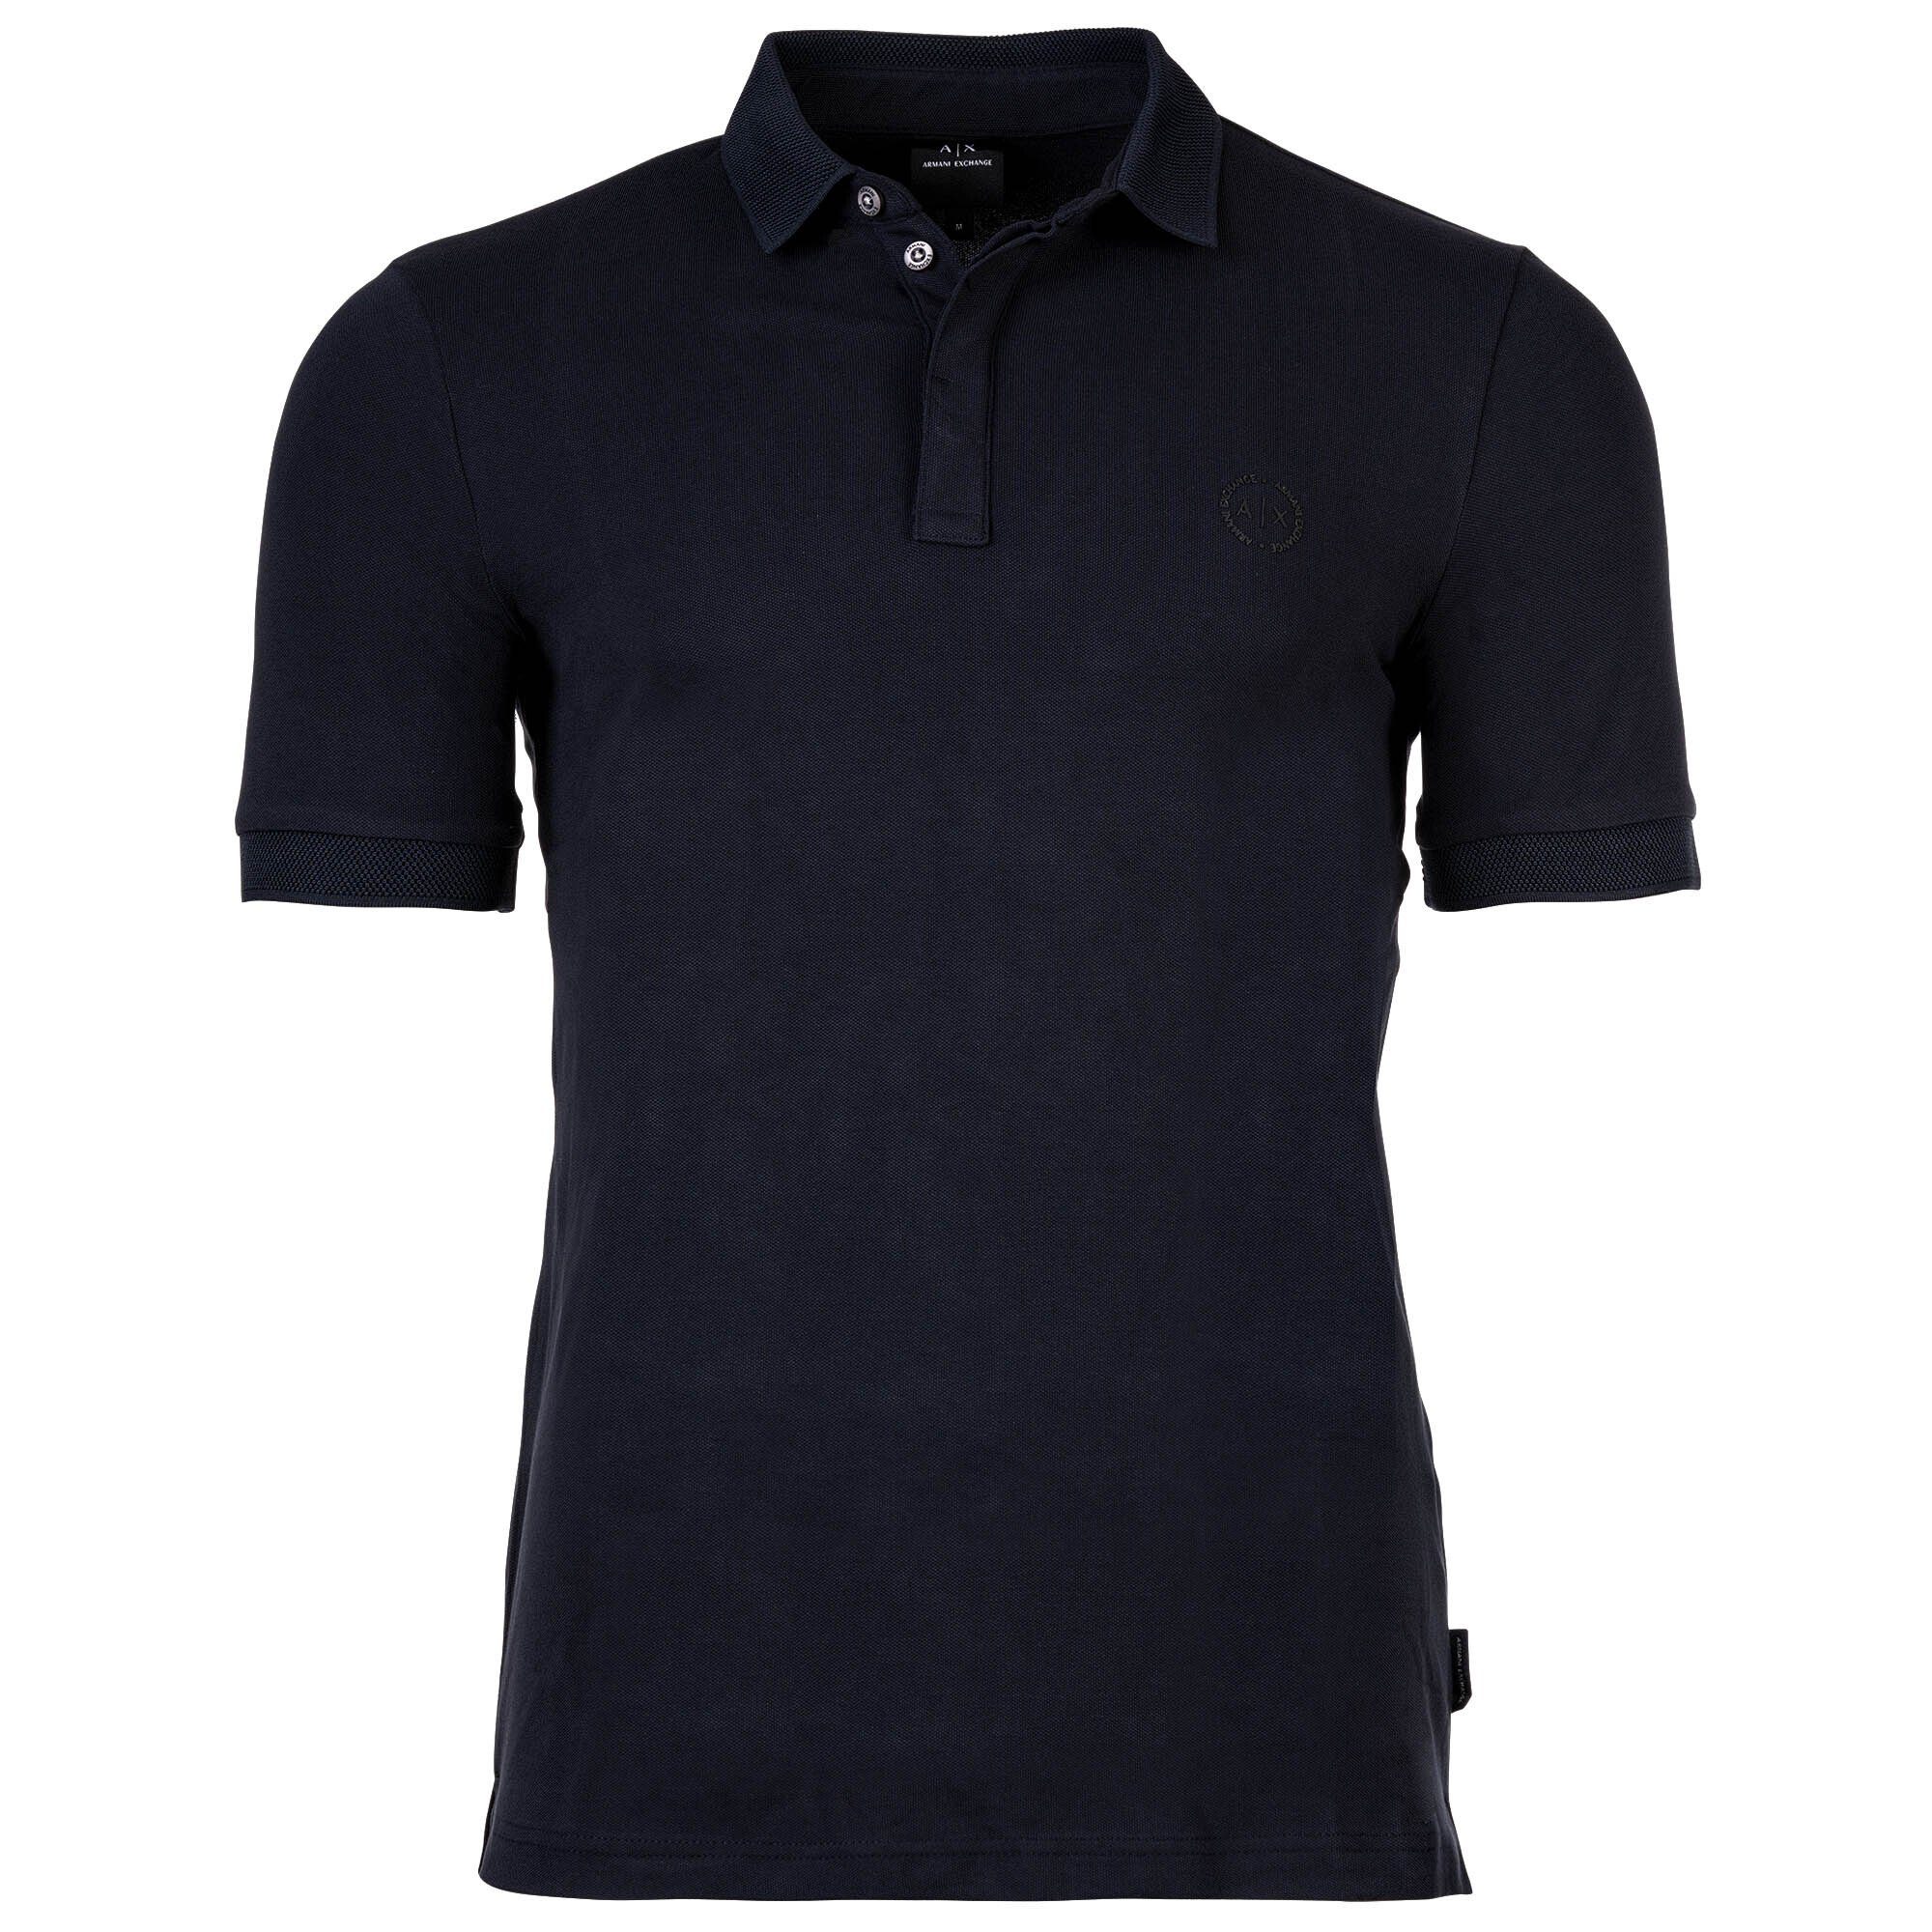 ARMANI EXCHANGE Poloshirt Herren Poloshirt - Slim fit, einfarbig, Cotton Marine